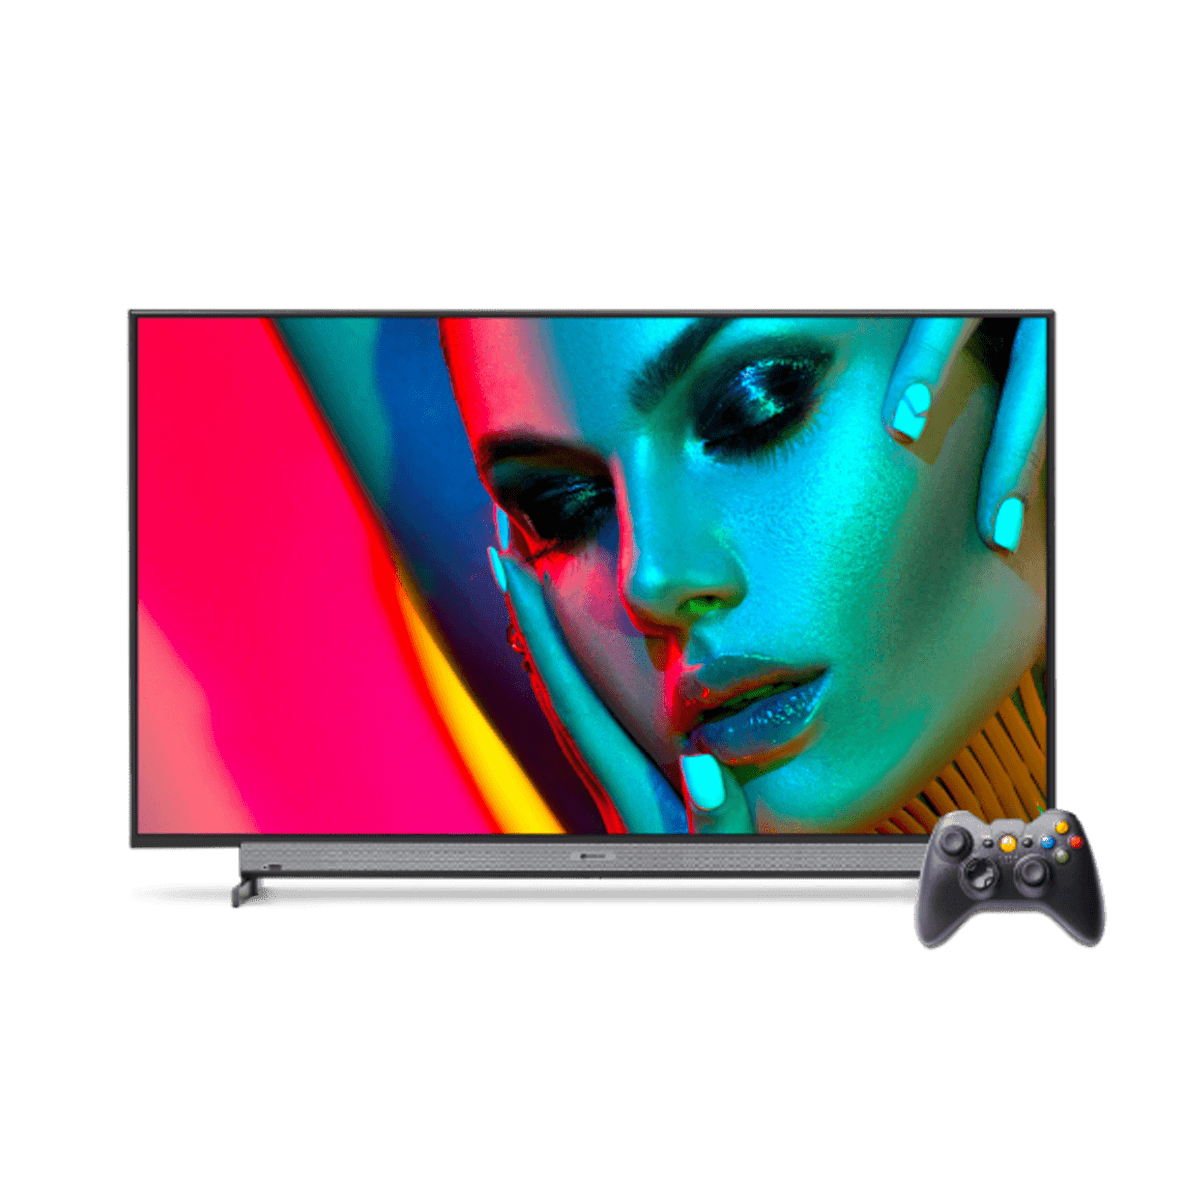 HD and Full HD Smart TVs